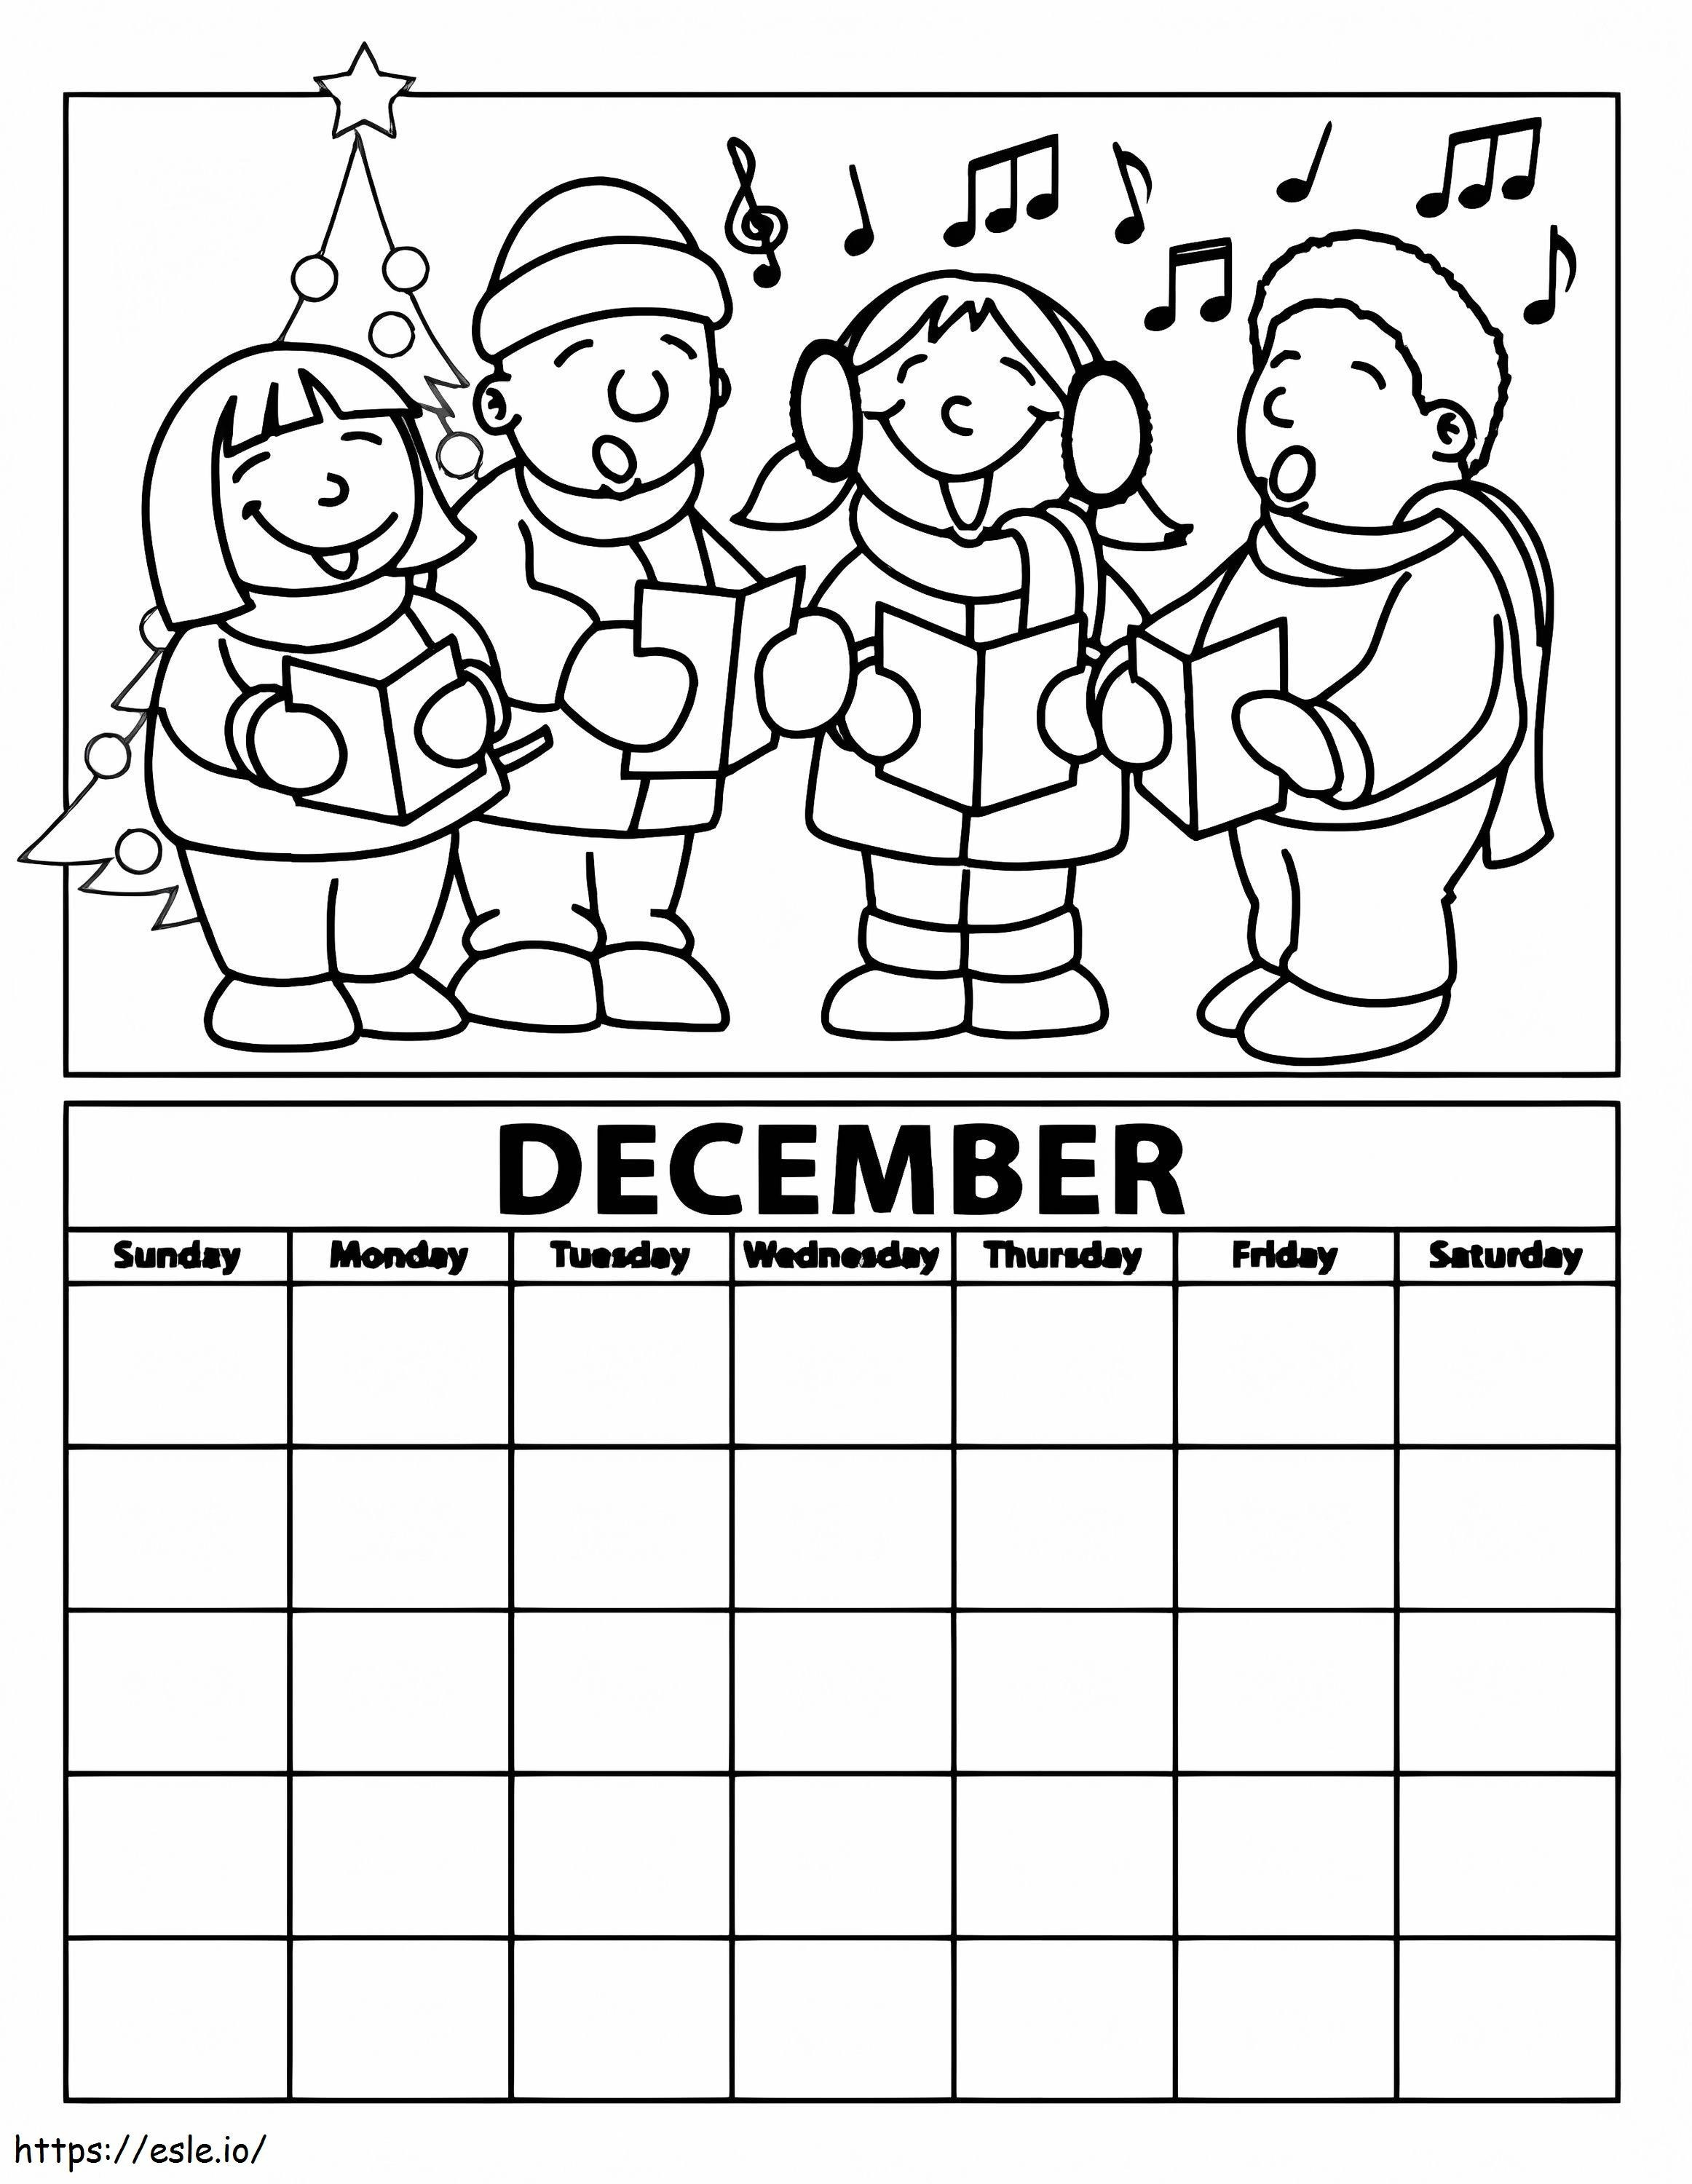 Printable December Calendar coloring page